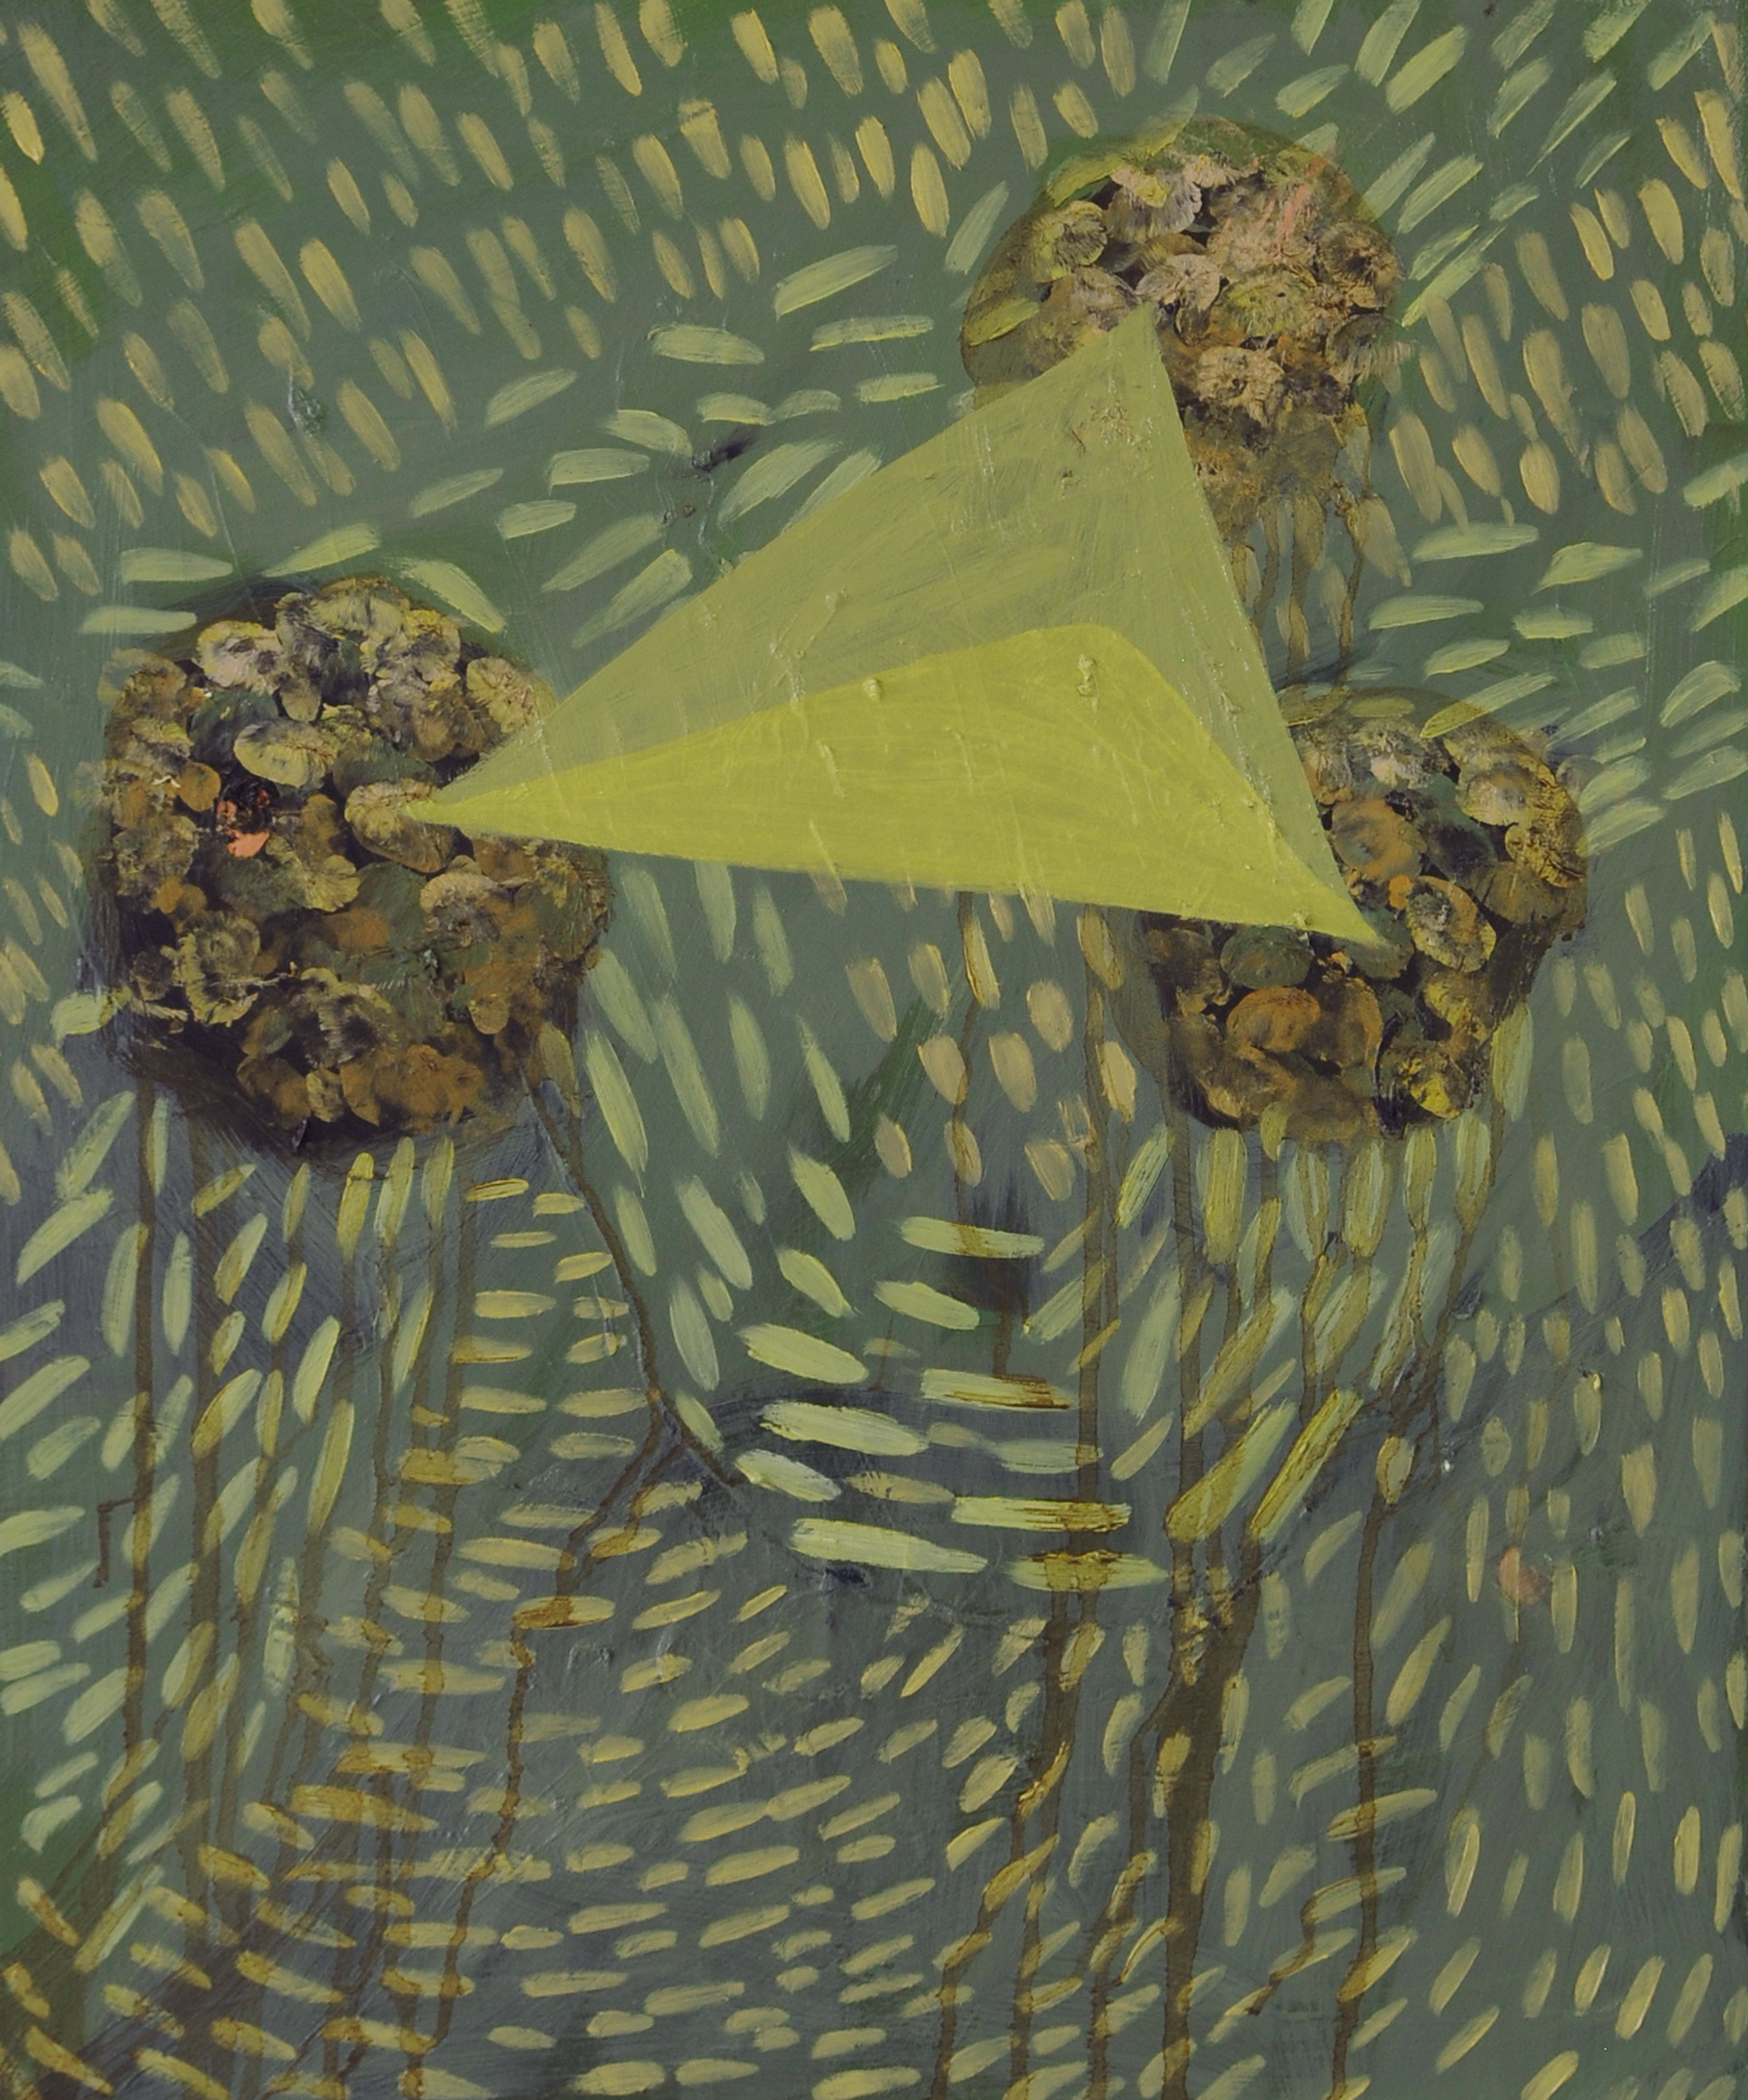 Envelope, 2011, Oil on cotton, 60 x 50 cm